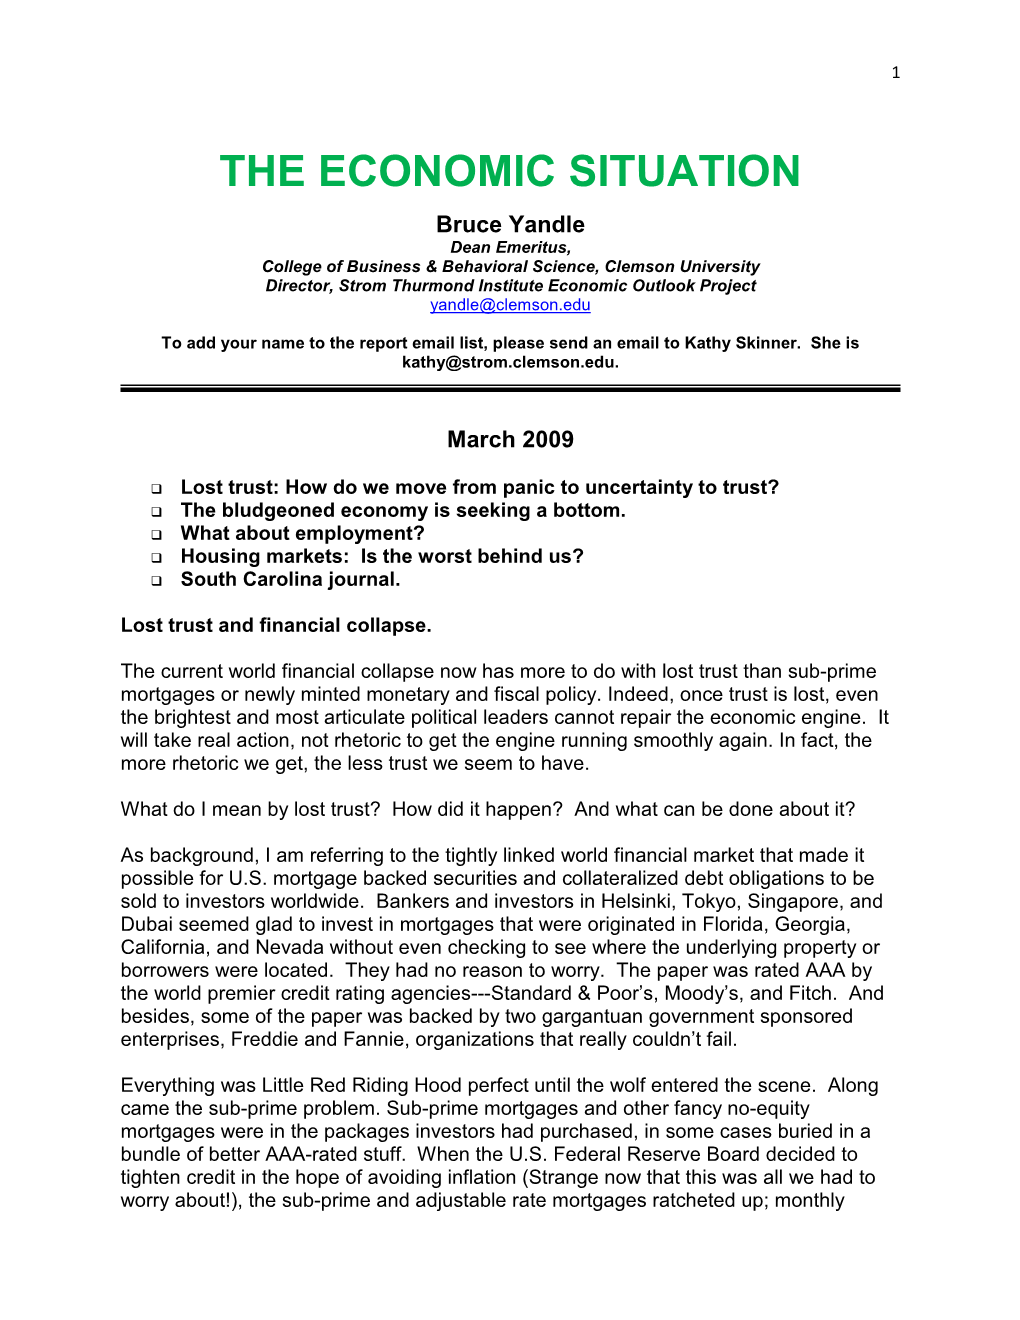 The Economic Situation 2009